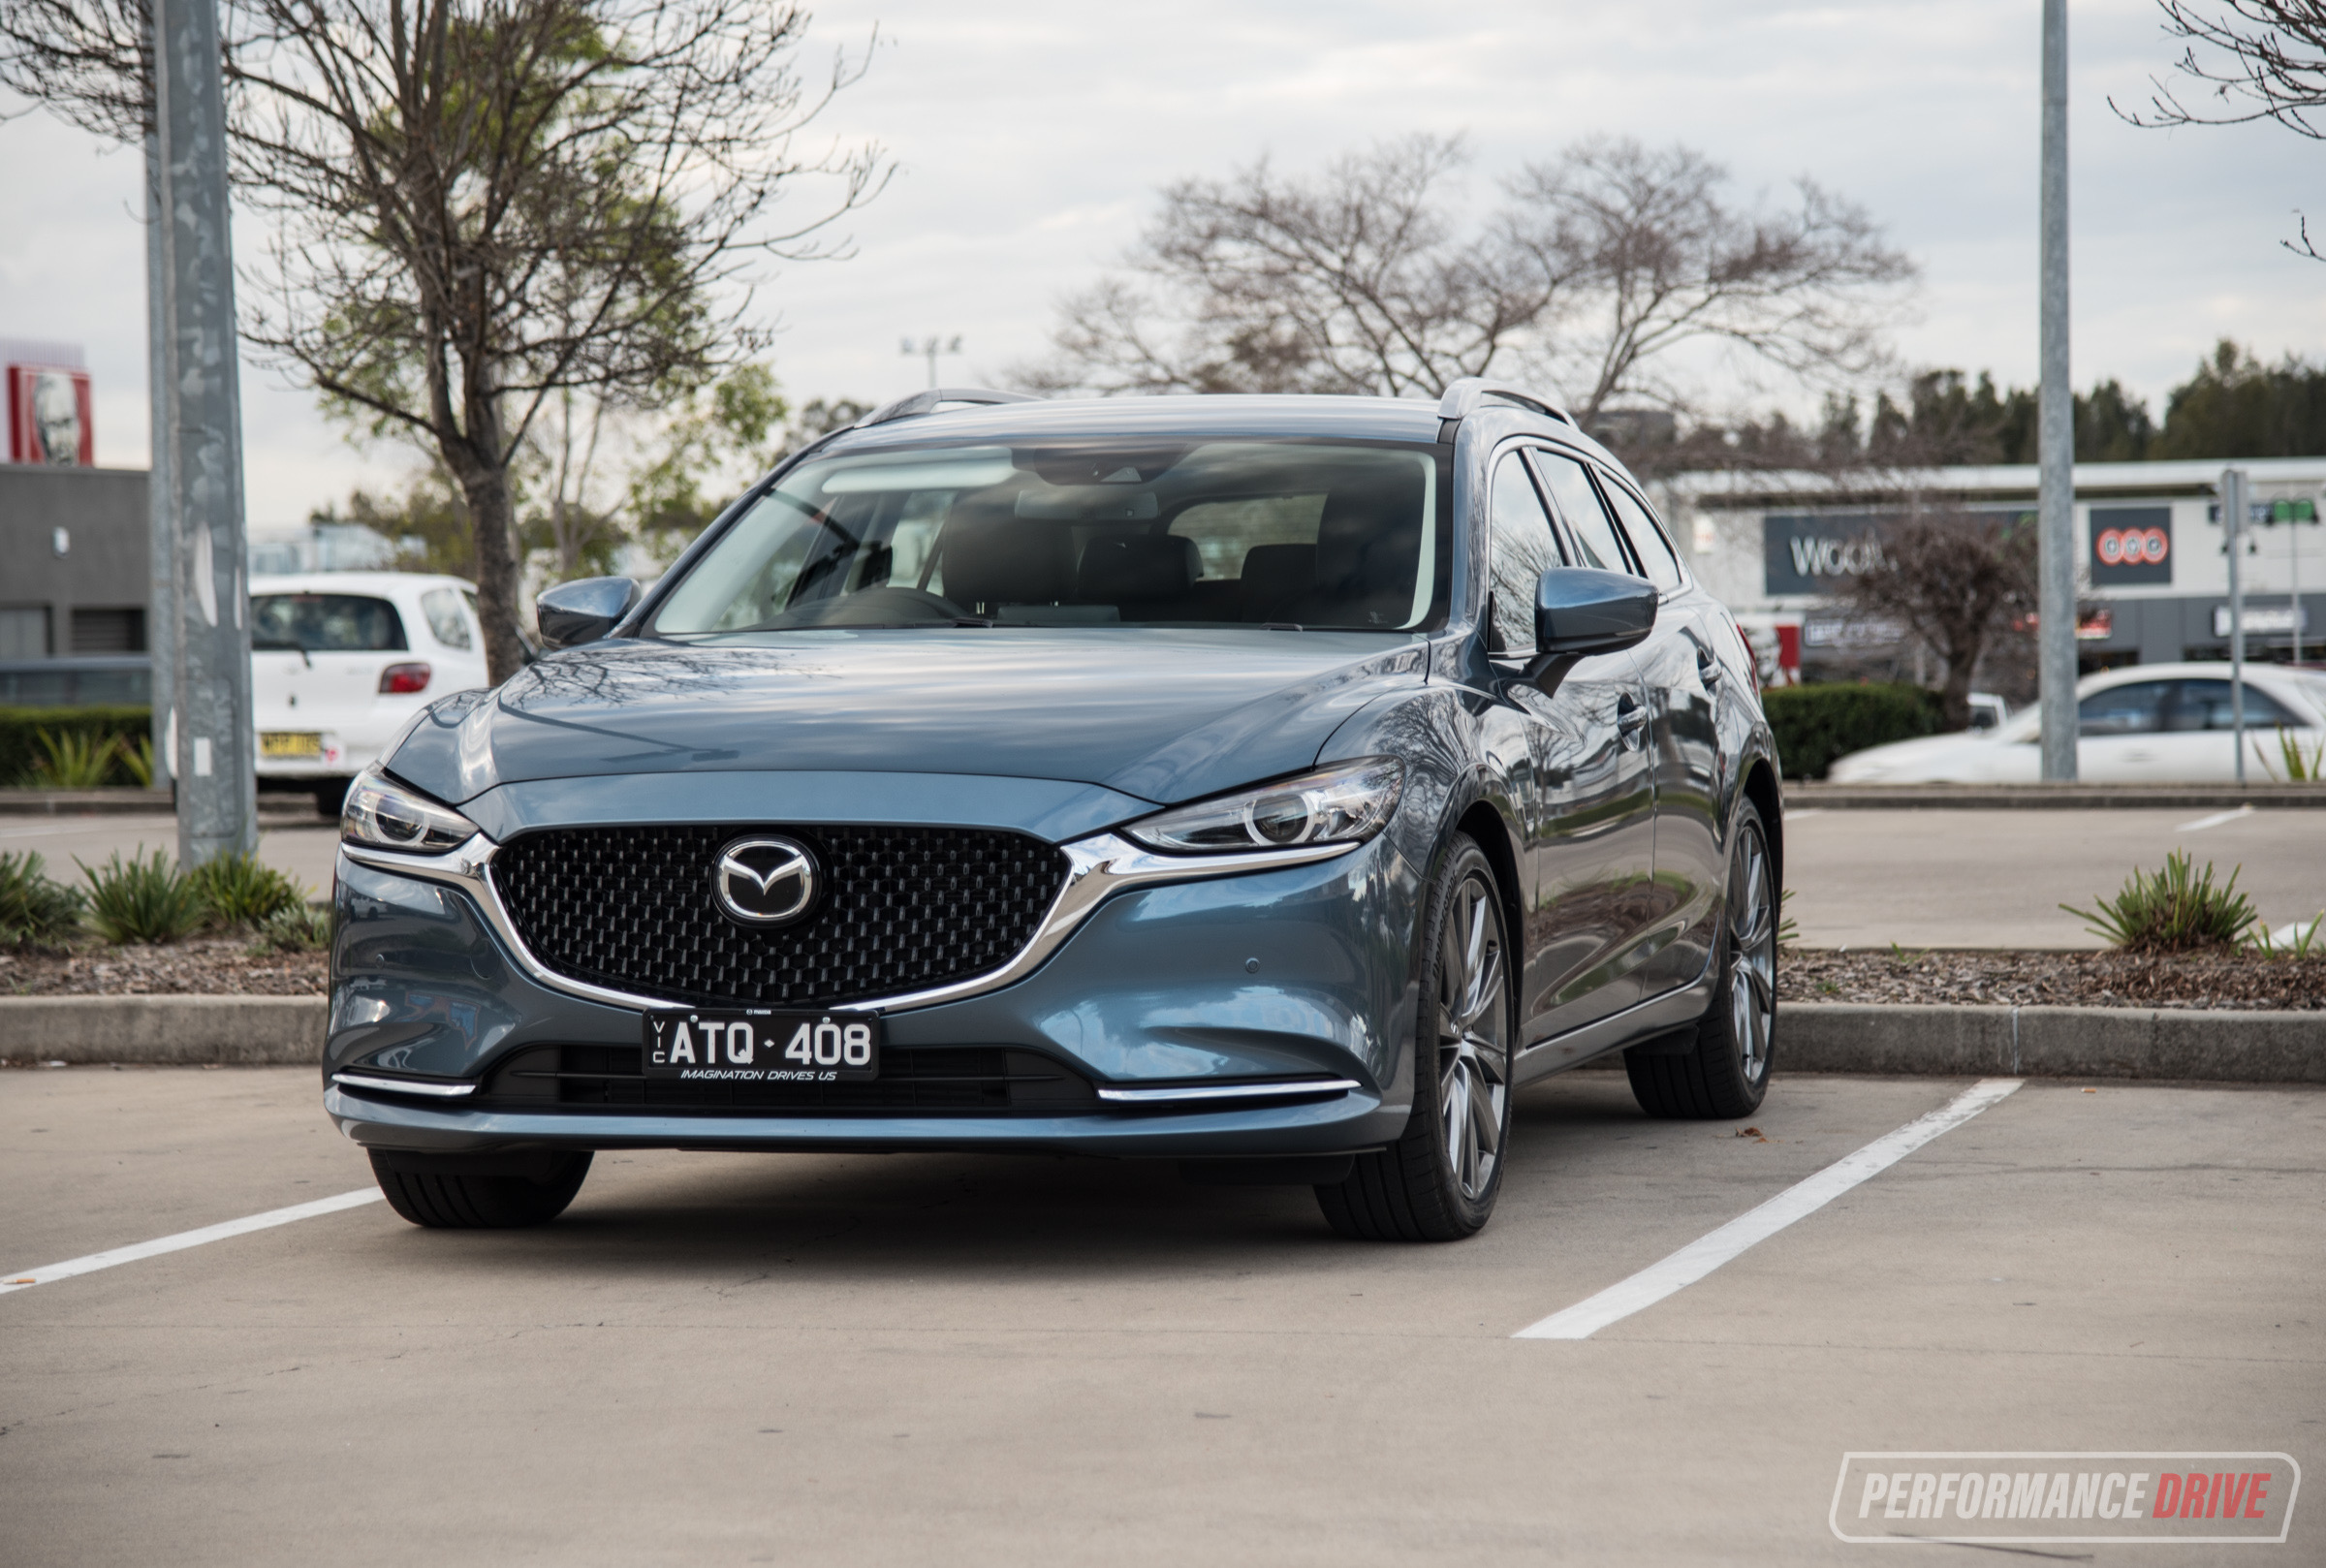 2018 Mazda6 GT turbo wagon review (video) PerformanceDrive